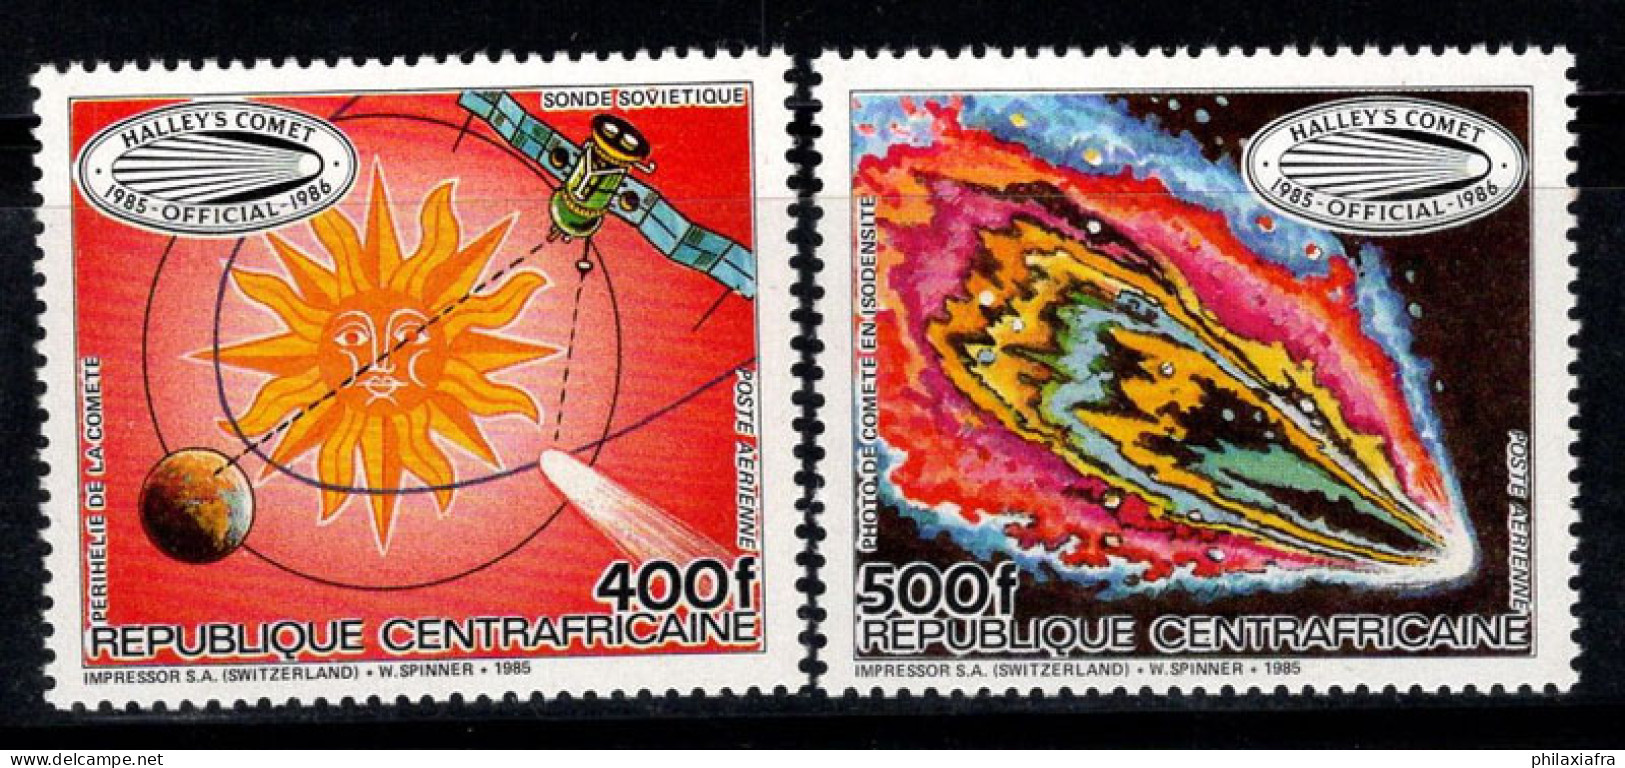 République Centrafricaine 1985 Mi. 1191-1192 Neuf ** 100% Poste Aérienne Comète De Halley - República Centroafricana